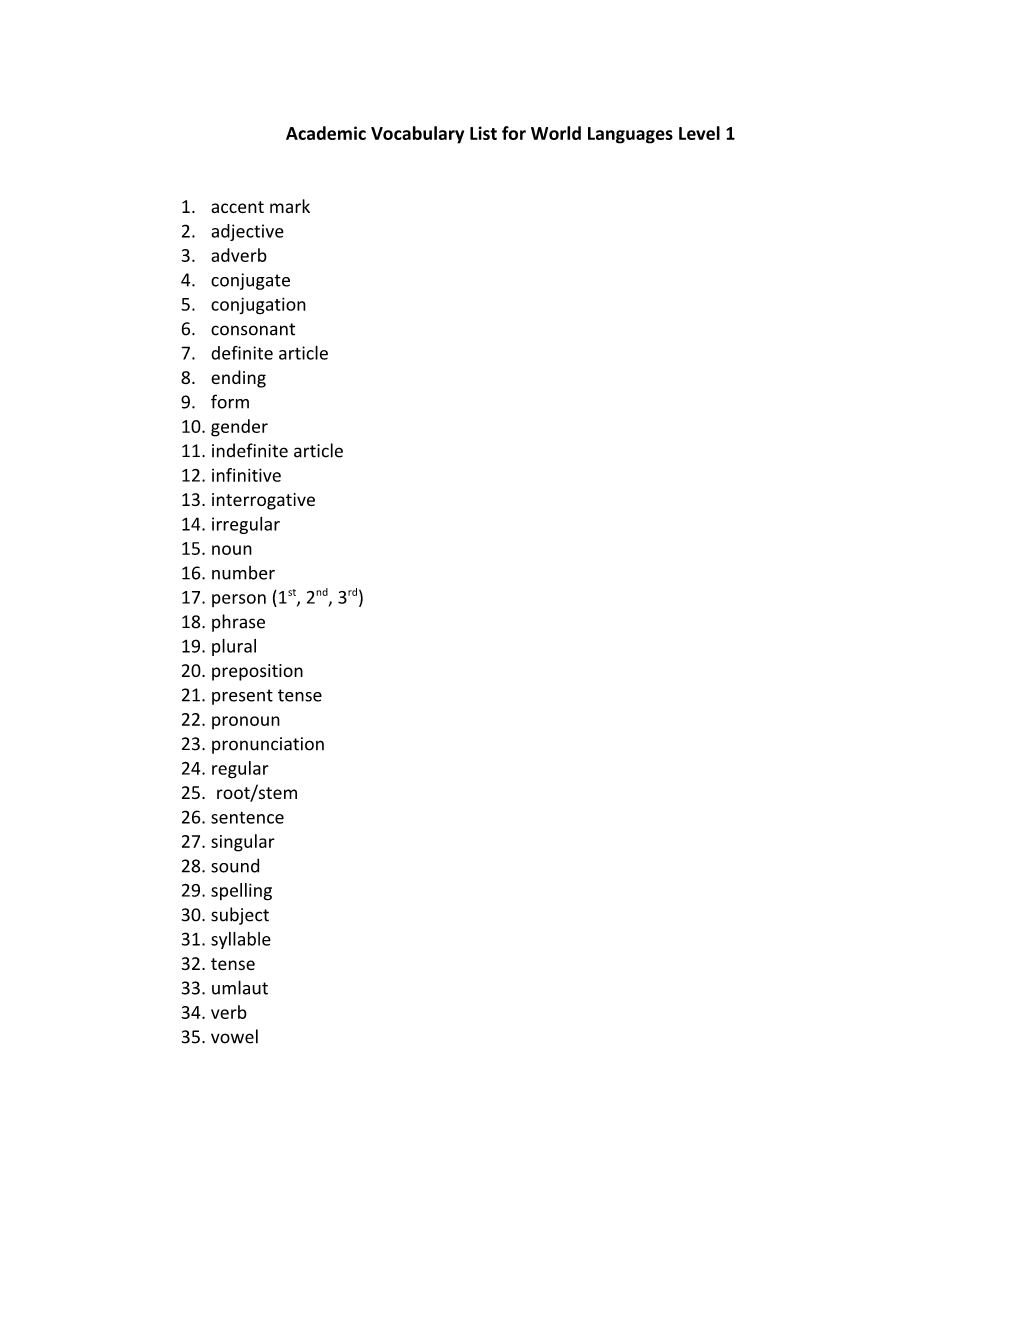 Academic Vocabulary List For (GRADE LEVEL/CONTENT AREA)